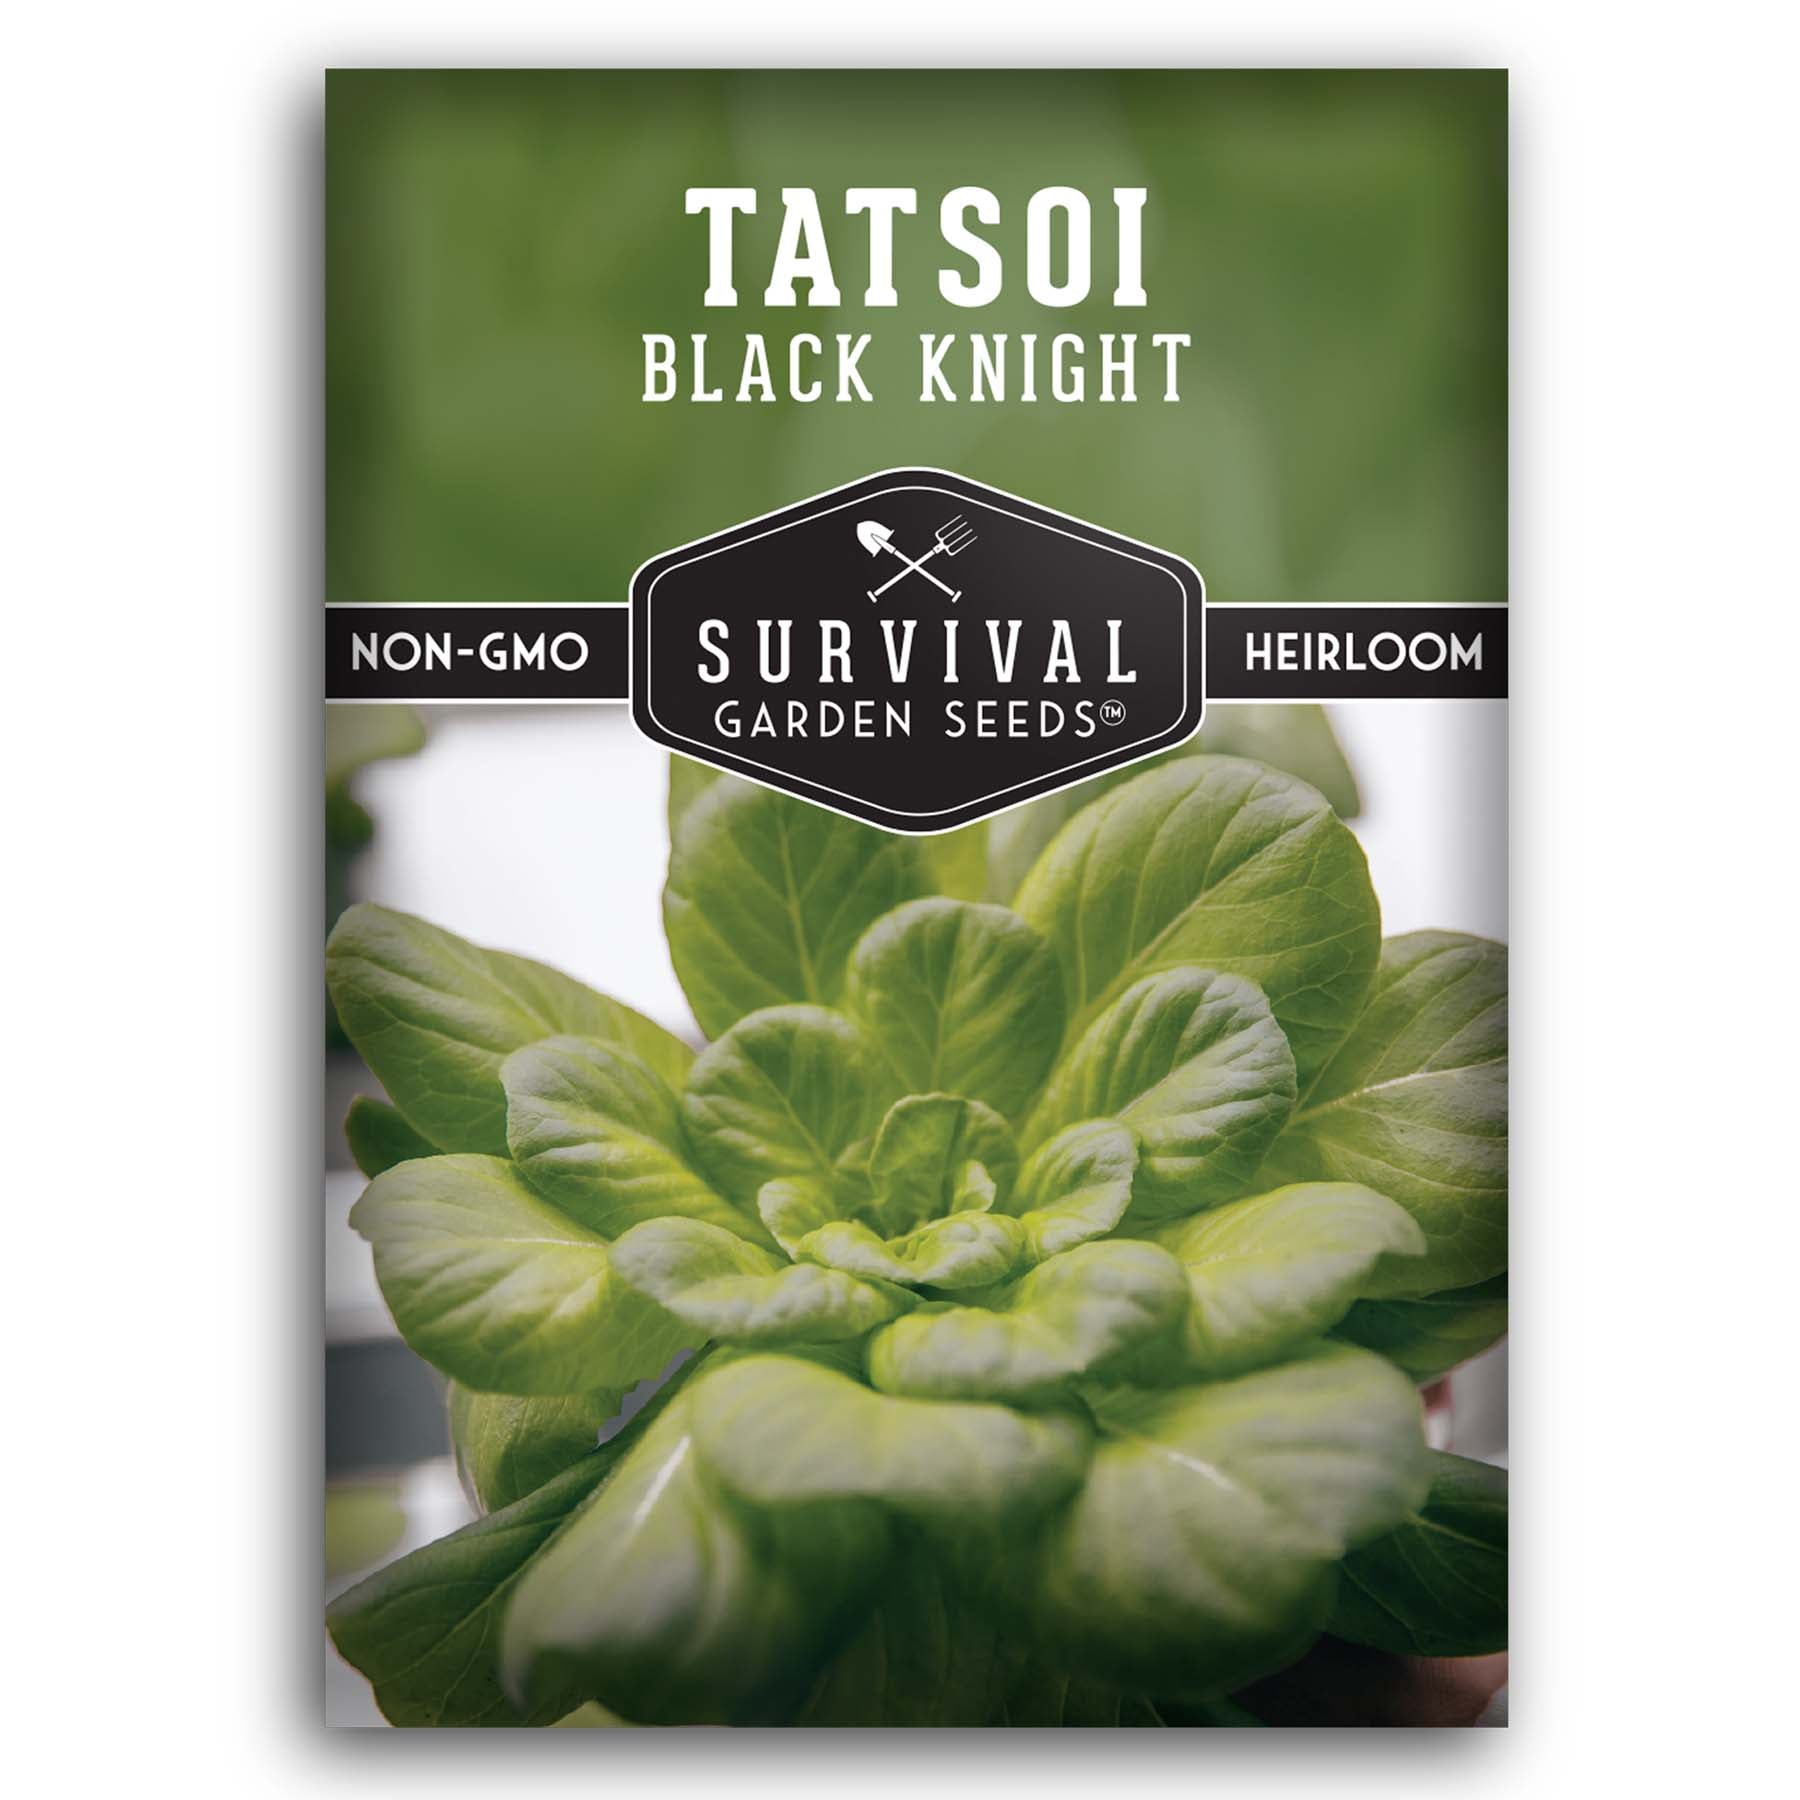 Black Knight Tatsoi seeds for planting